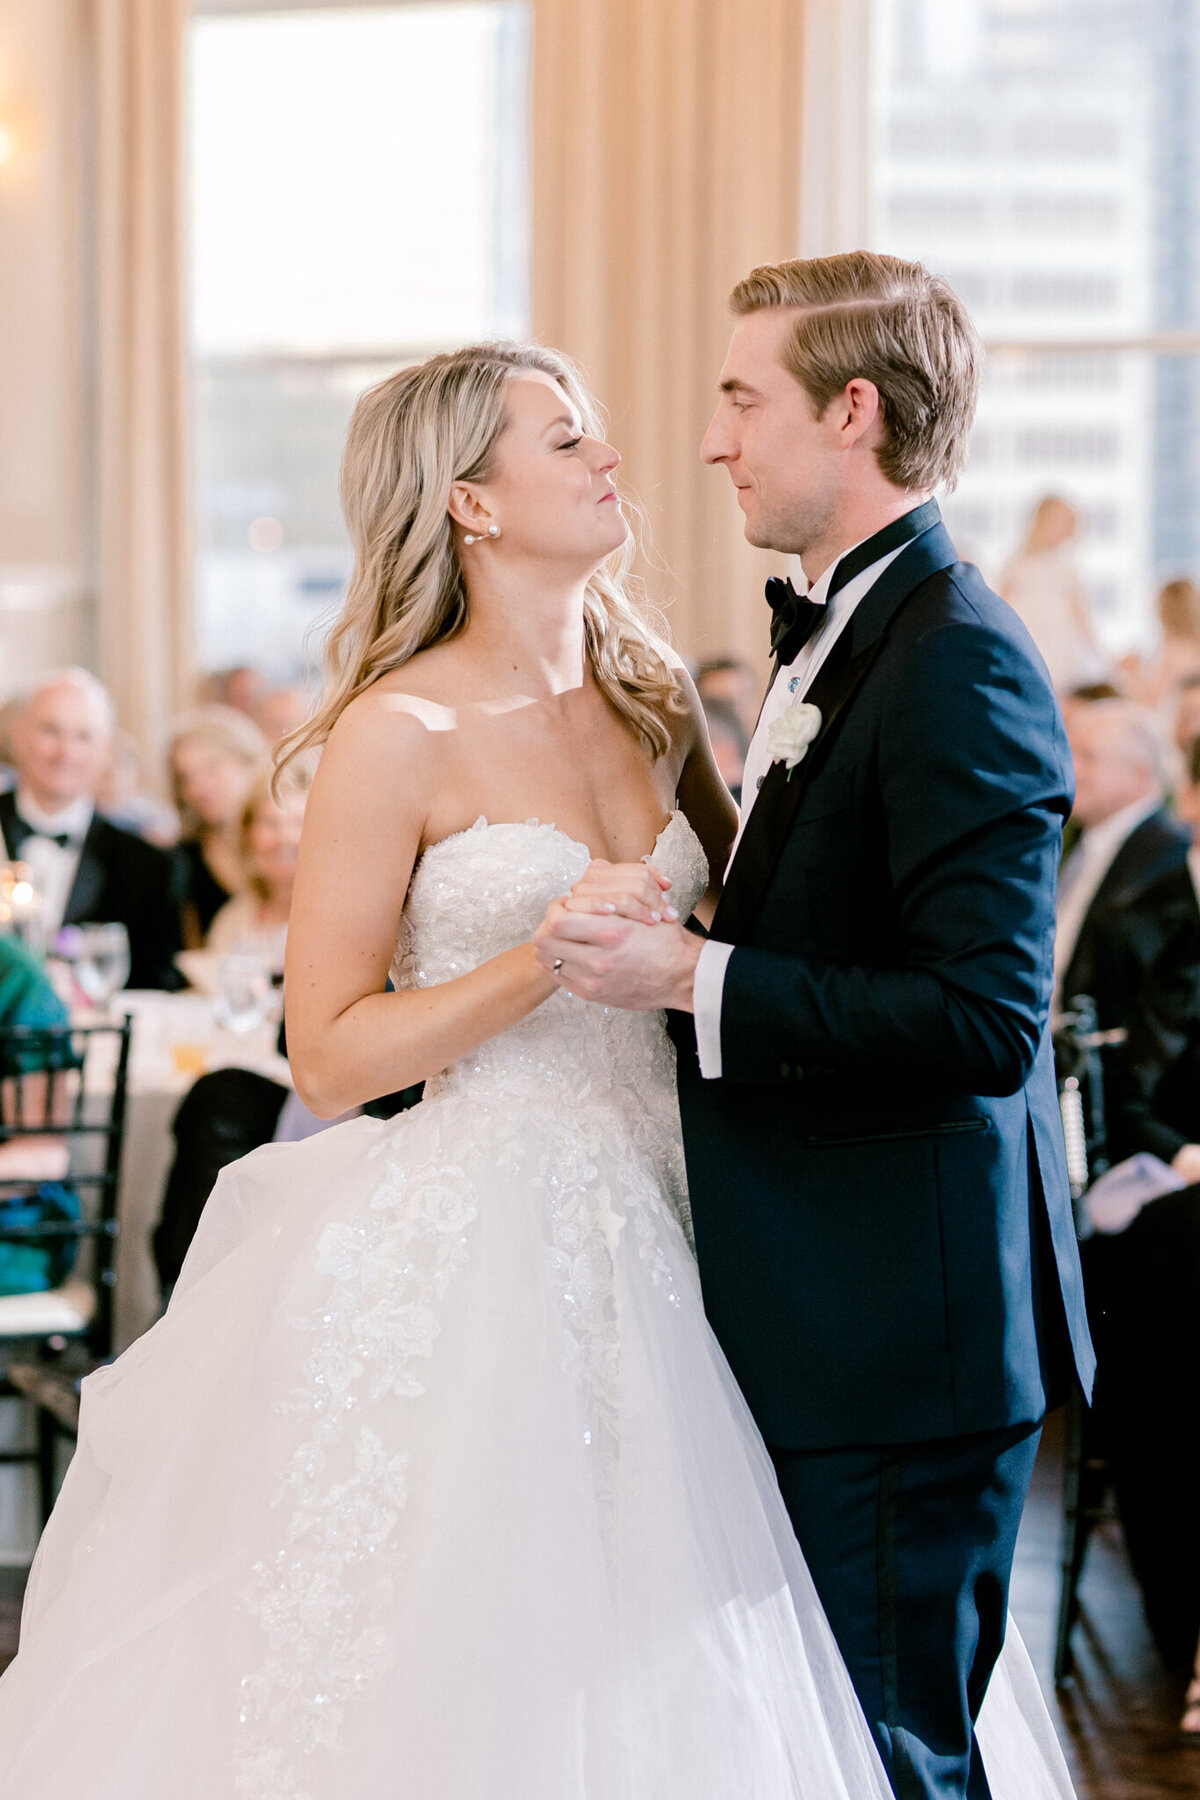 Shelby & Thomas's Wedding at HPUMC The Room on Main | Dallas Wedding Photographer | Sami Kathryn Photography-192